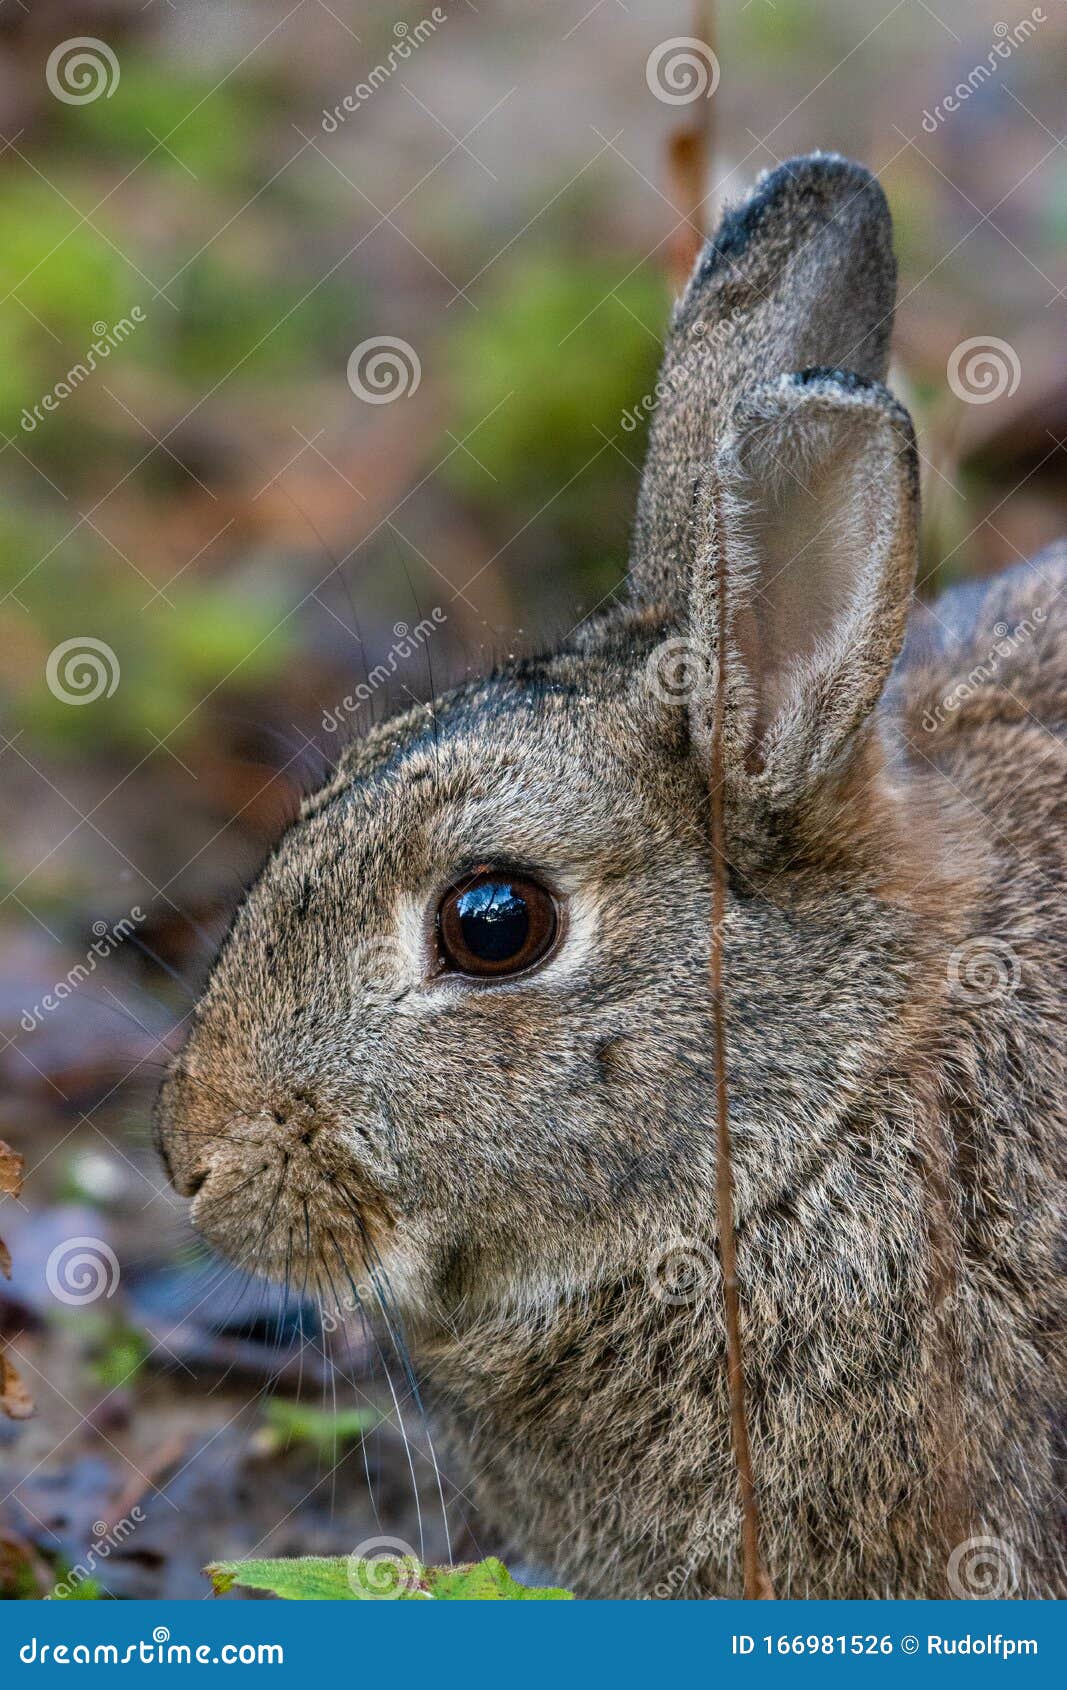 Headshot of a wild rabbit stock photo. Image of animal - 166981526